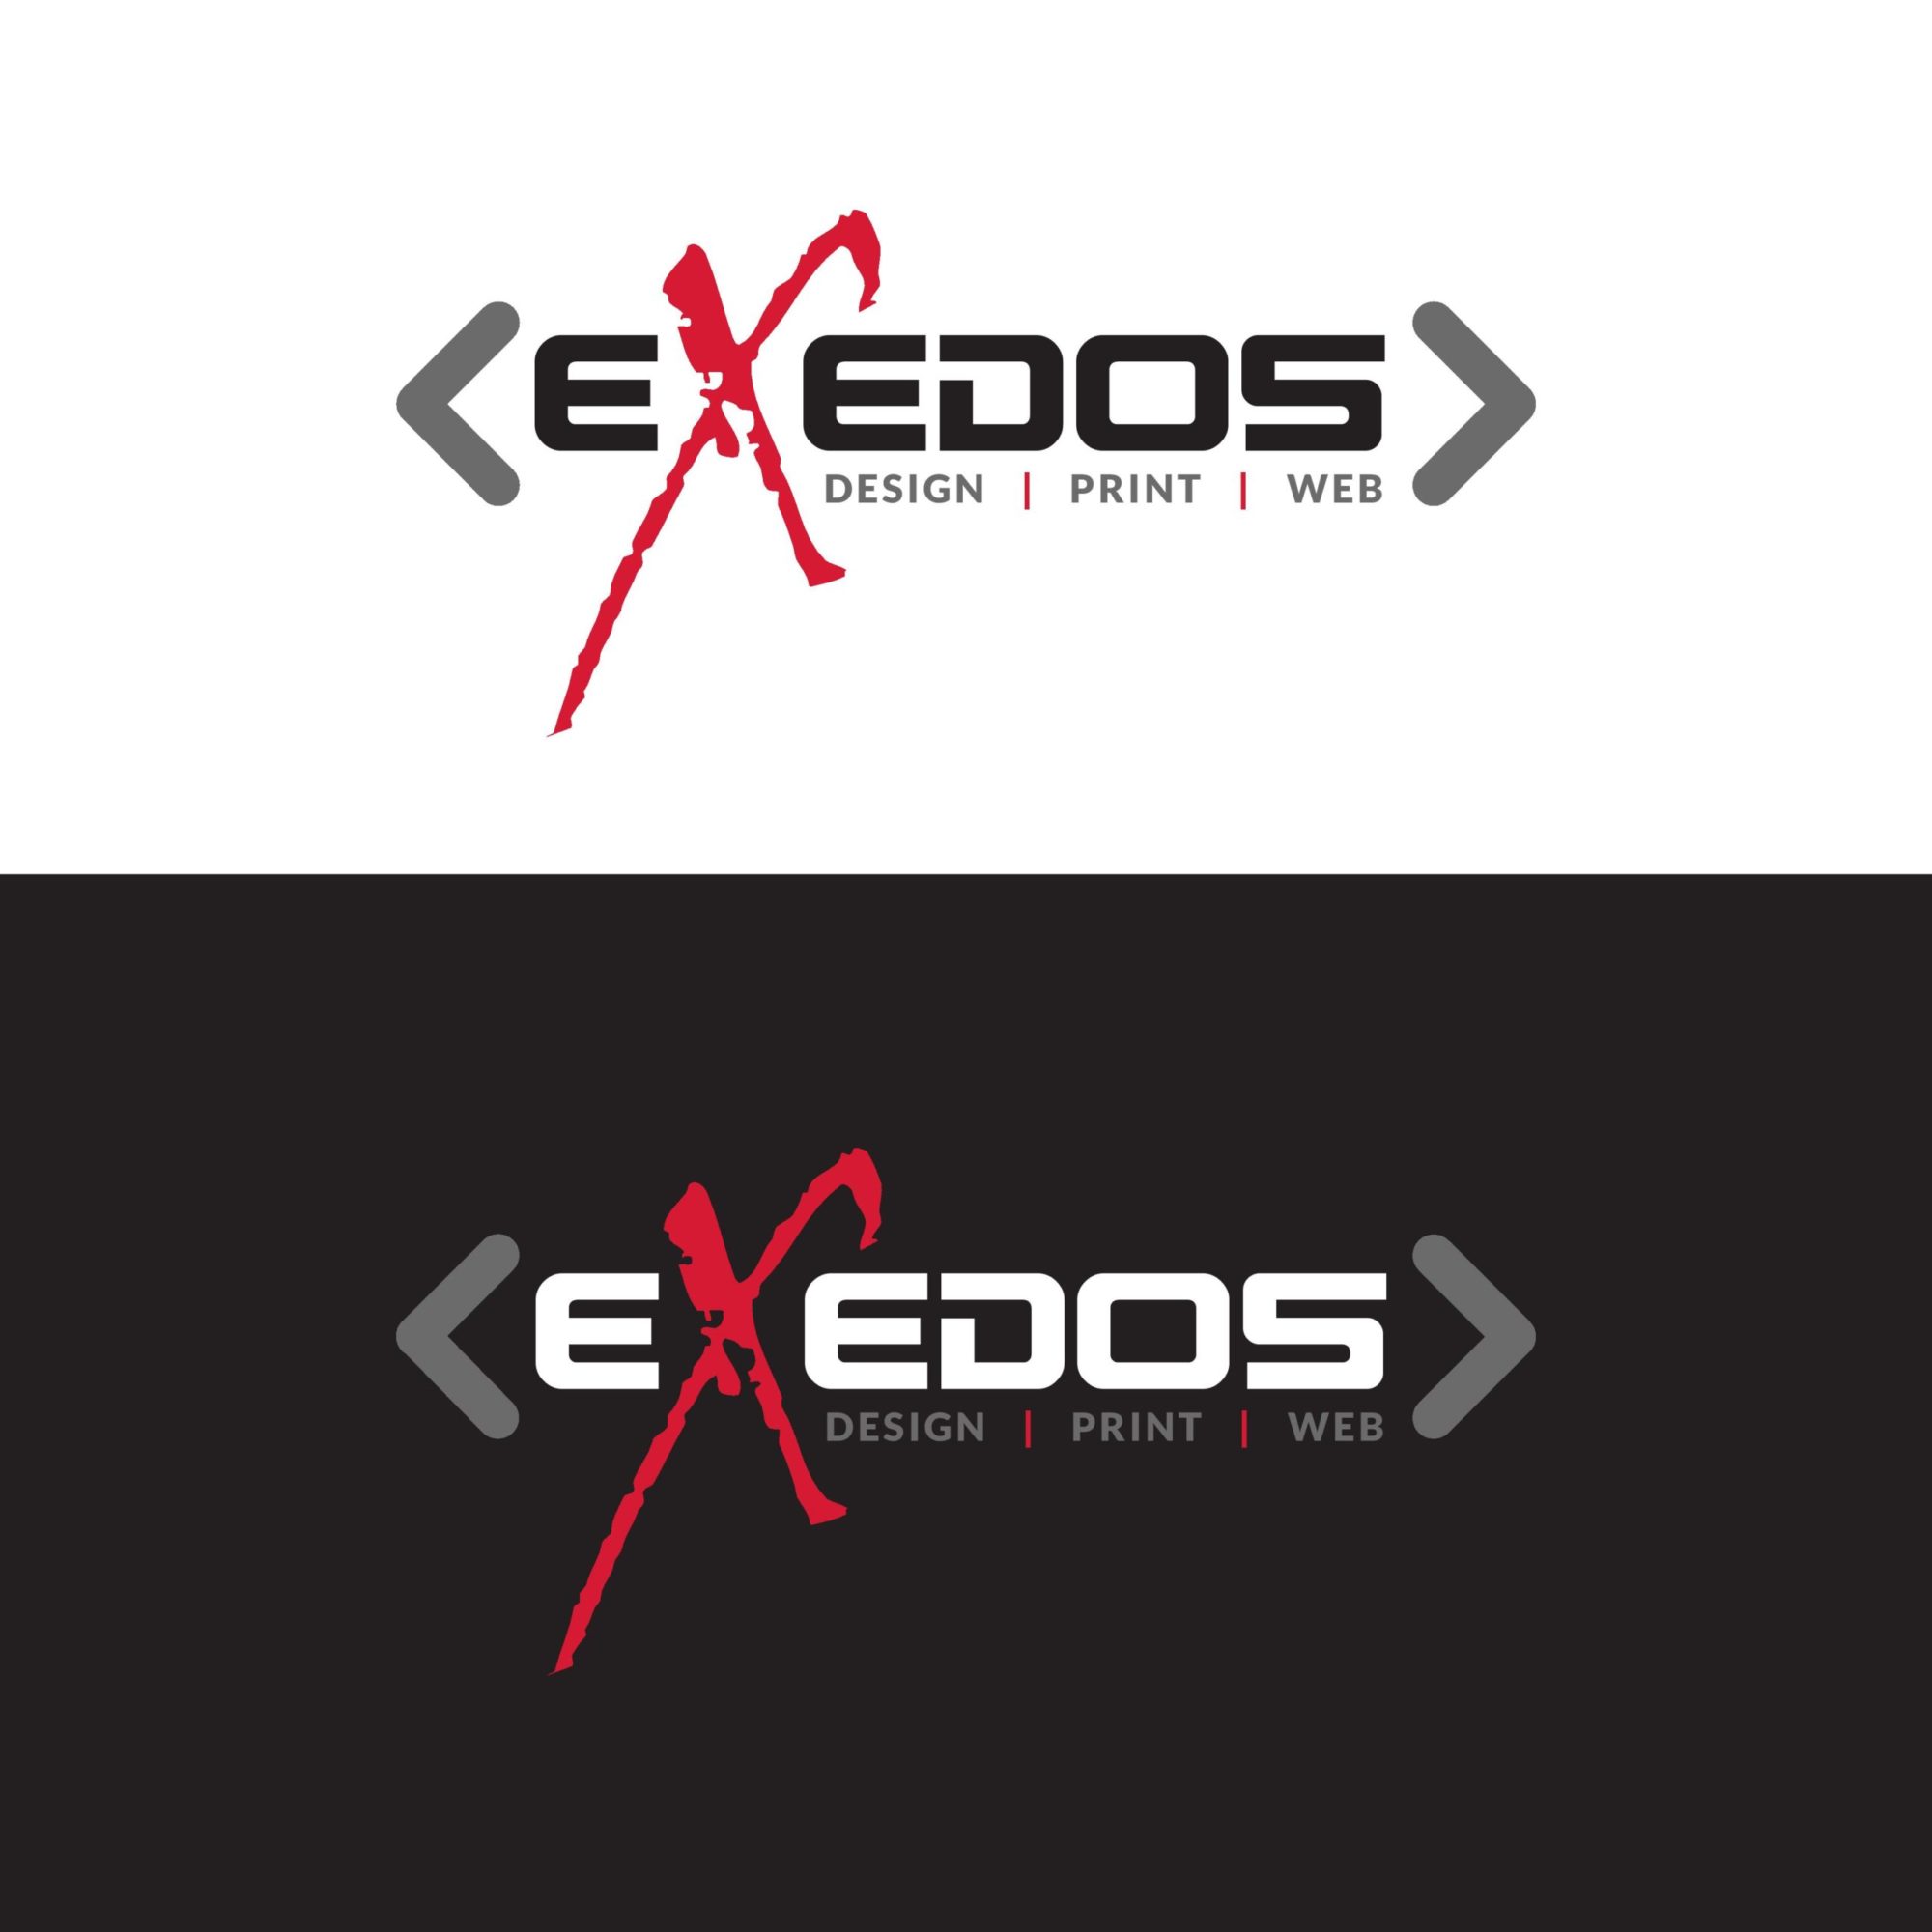 Logo Exedos-page-001